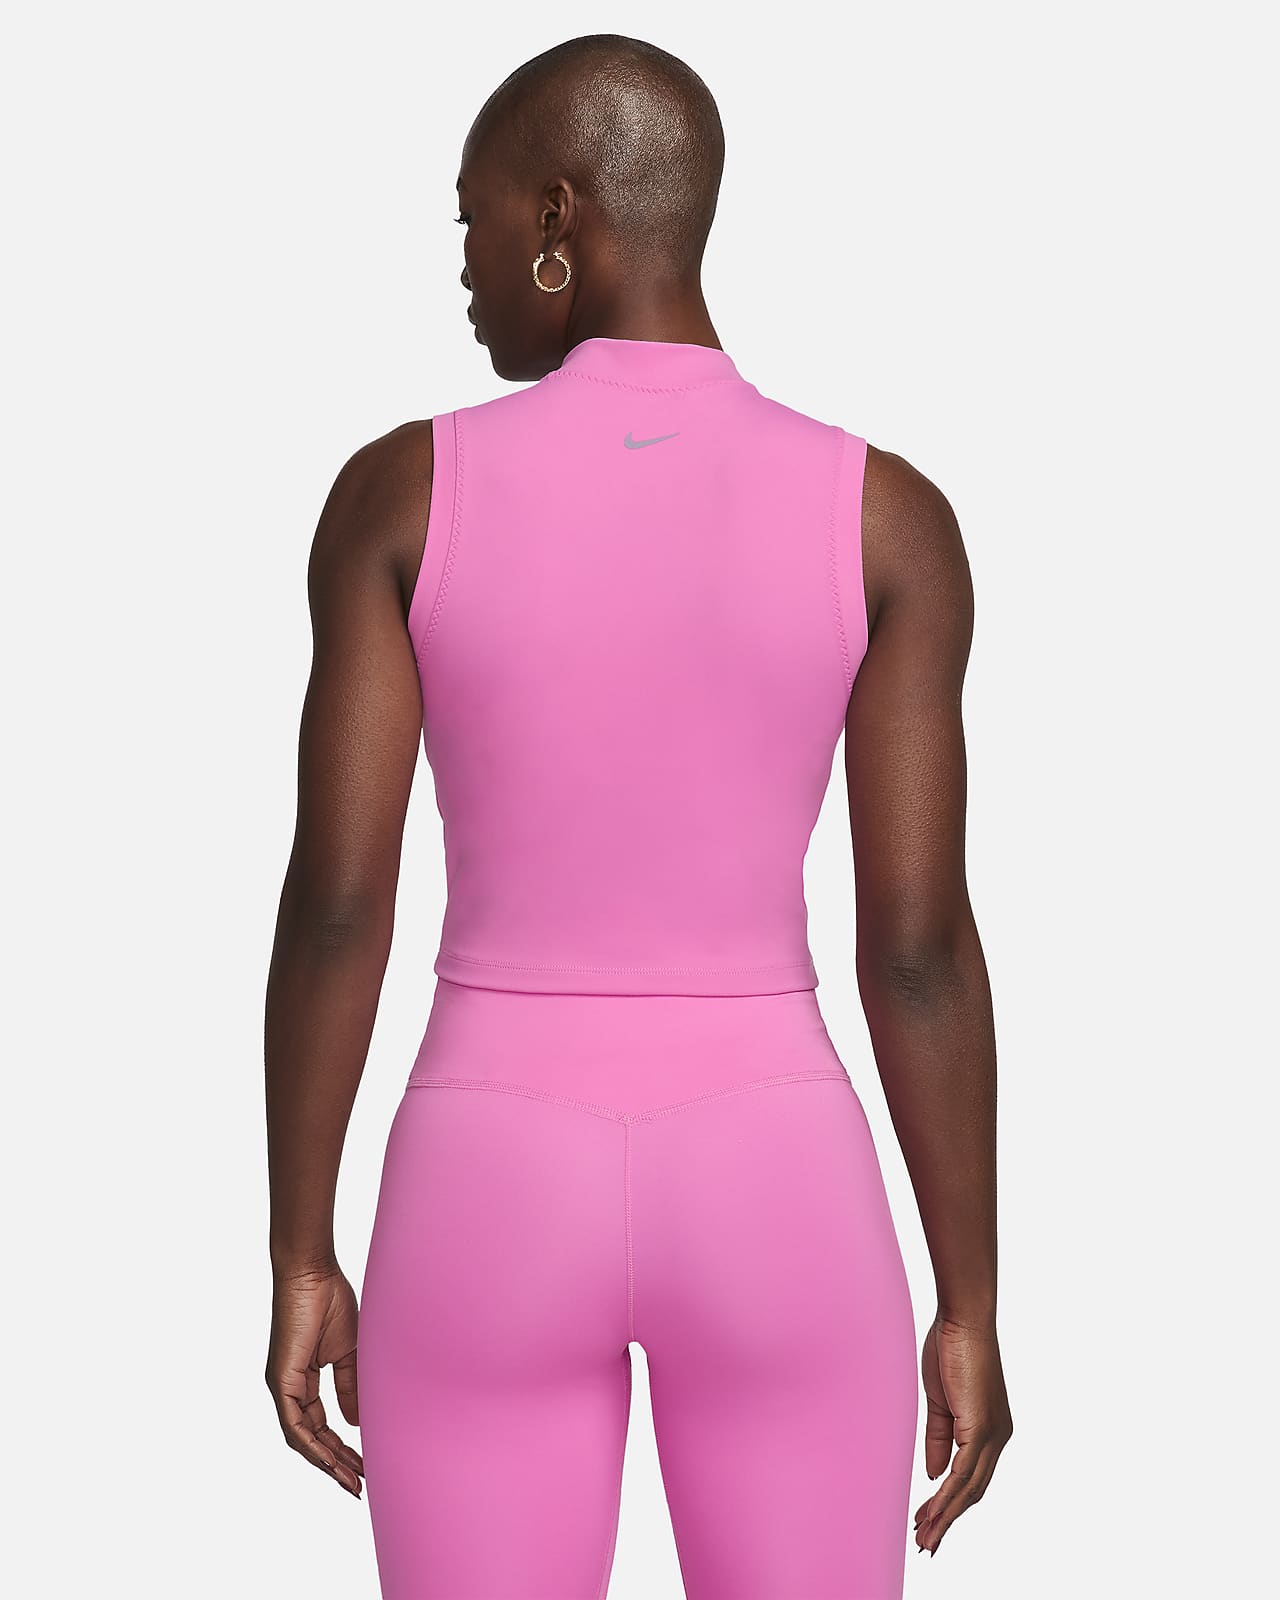 Nike Dri-Fit S/S Athletic Shirt Women's Size XL Hot Pink Short